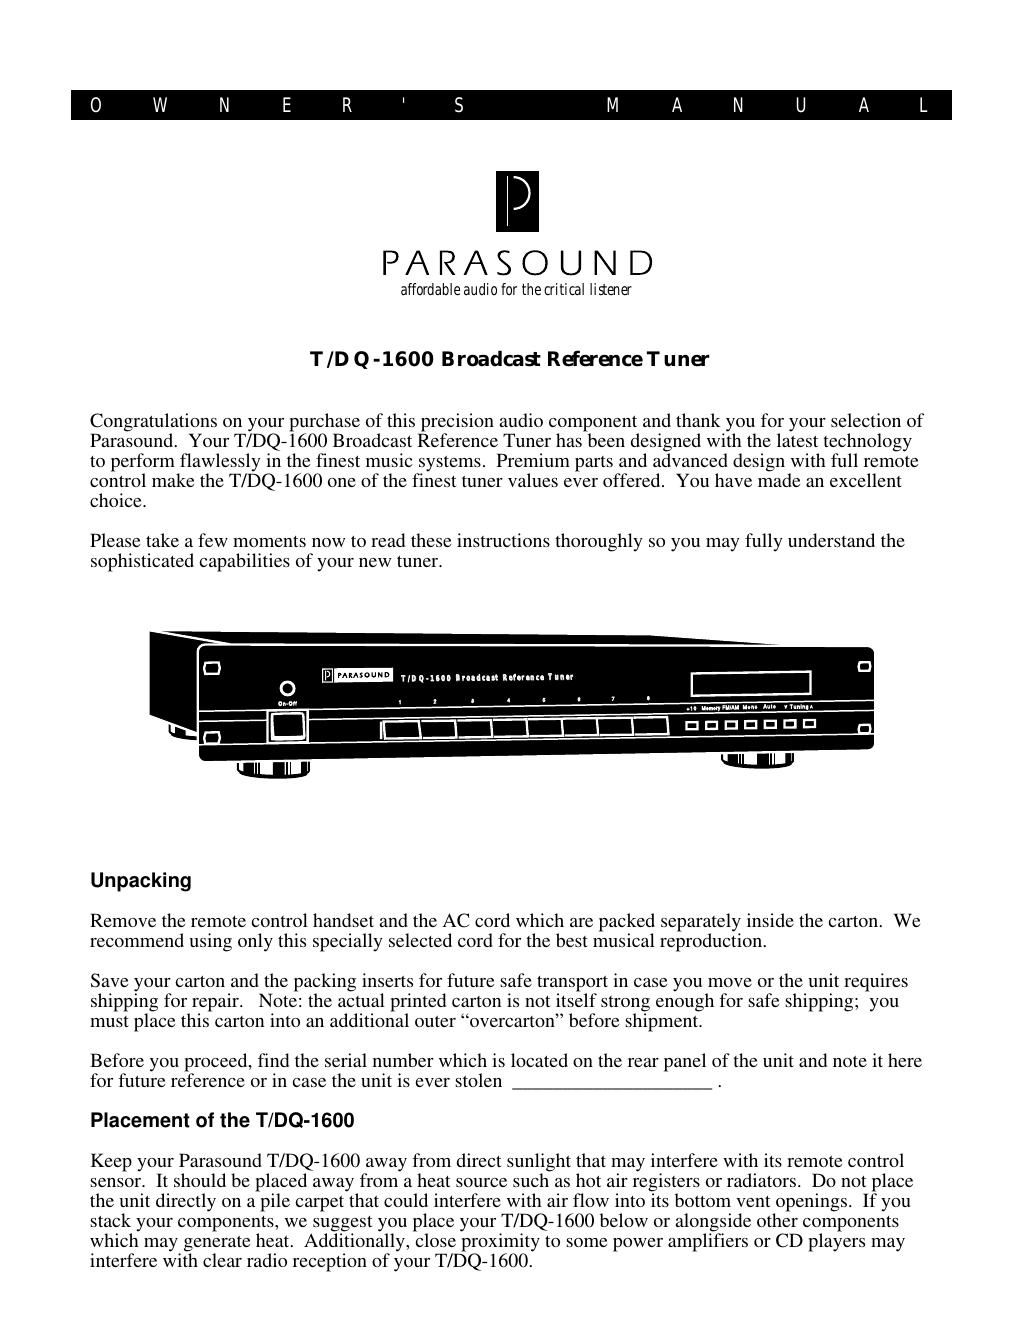 parasound tdq 1600 owners manual